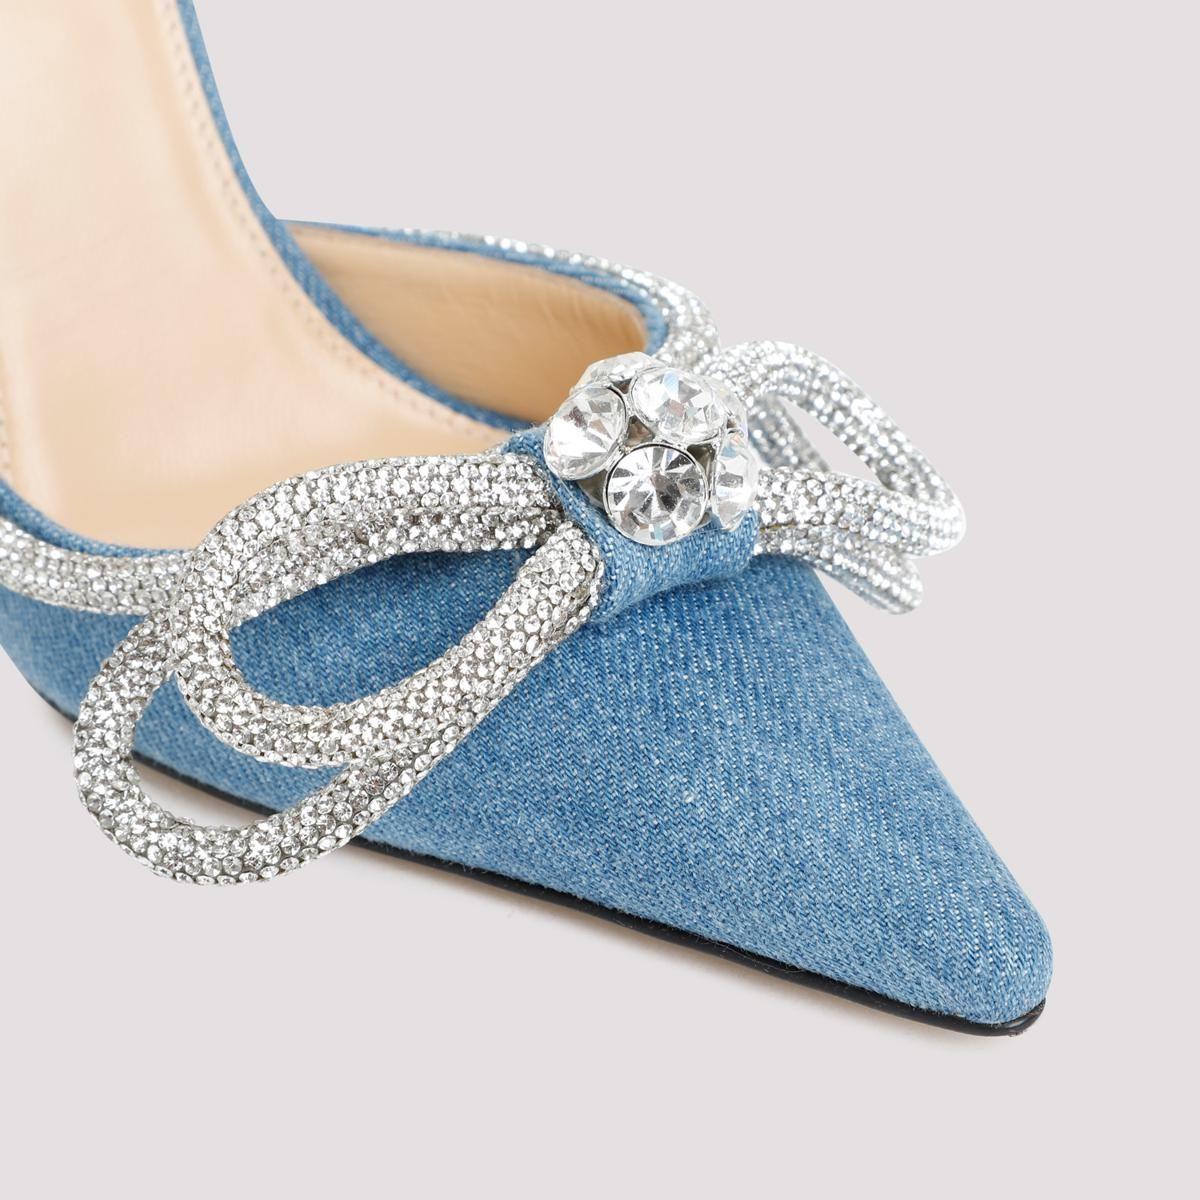 Mach & Mach bow-detail Denim Sandals - Blue